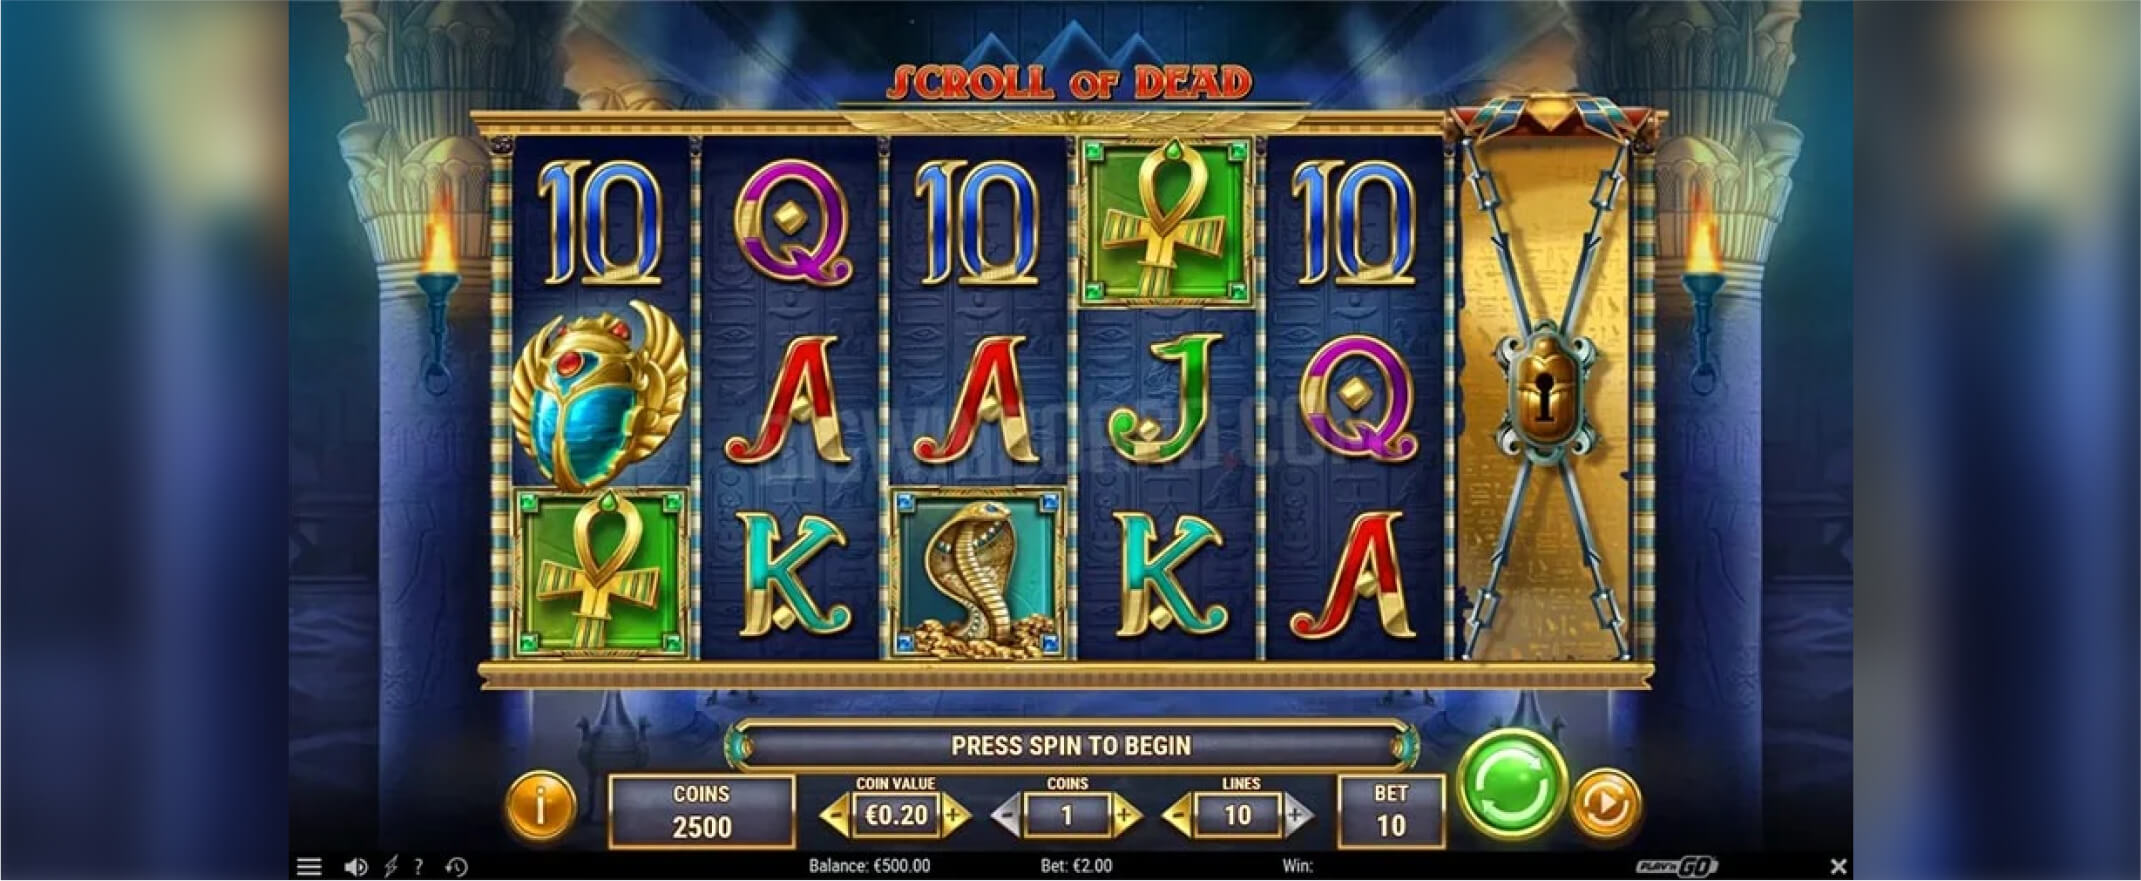 Scroll of Dead slot screenshot of the reels